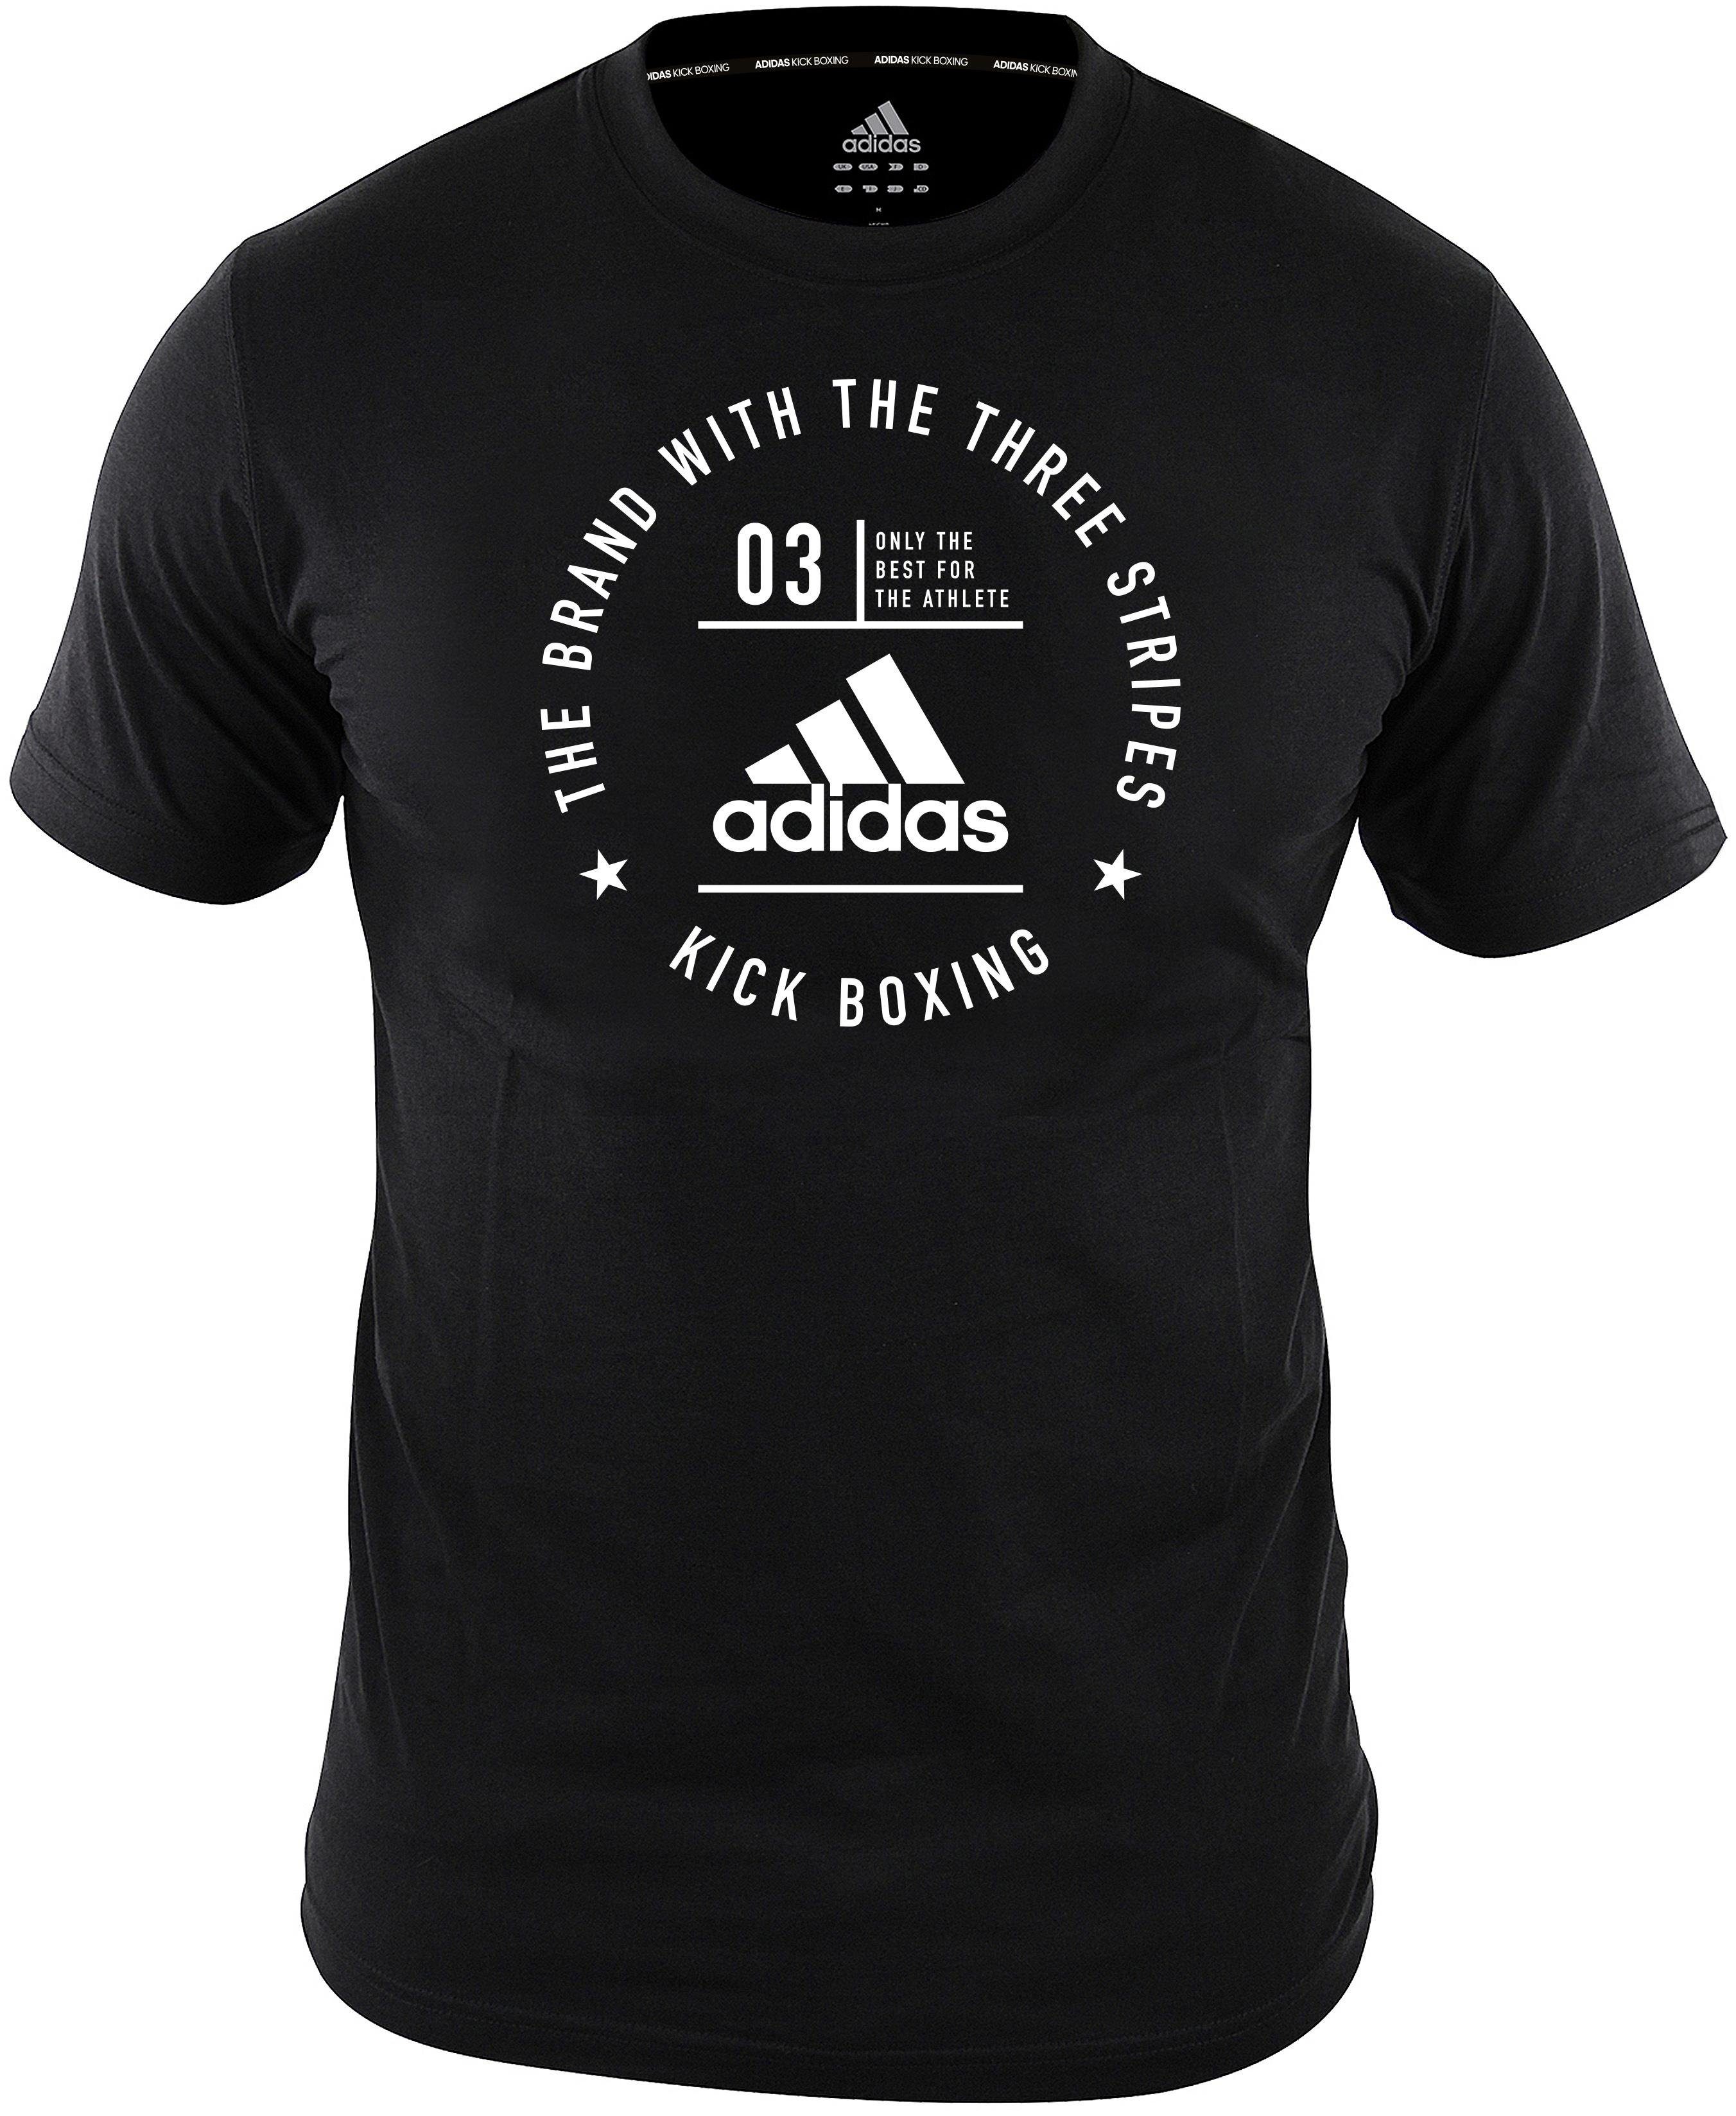 adidas kickboxing shirt purchase 6b4da 0d375